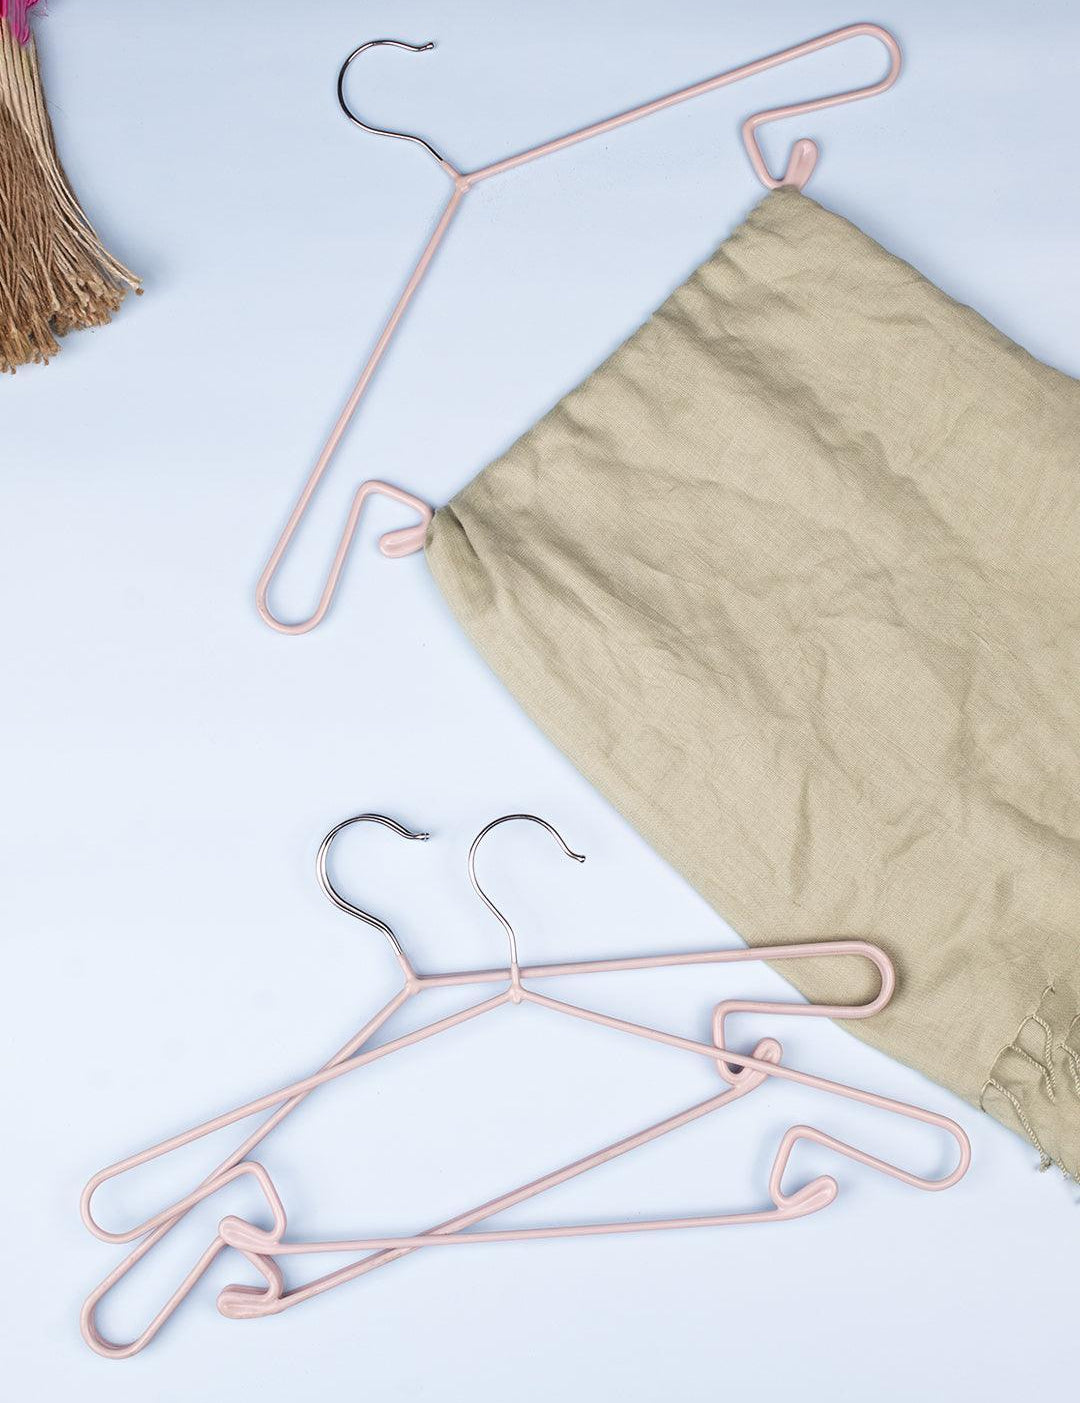 Cloth Hangers, Peach, Iron, Set of 5 - MARKET 99